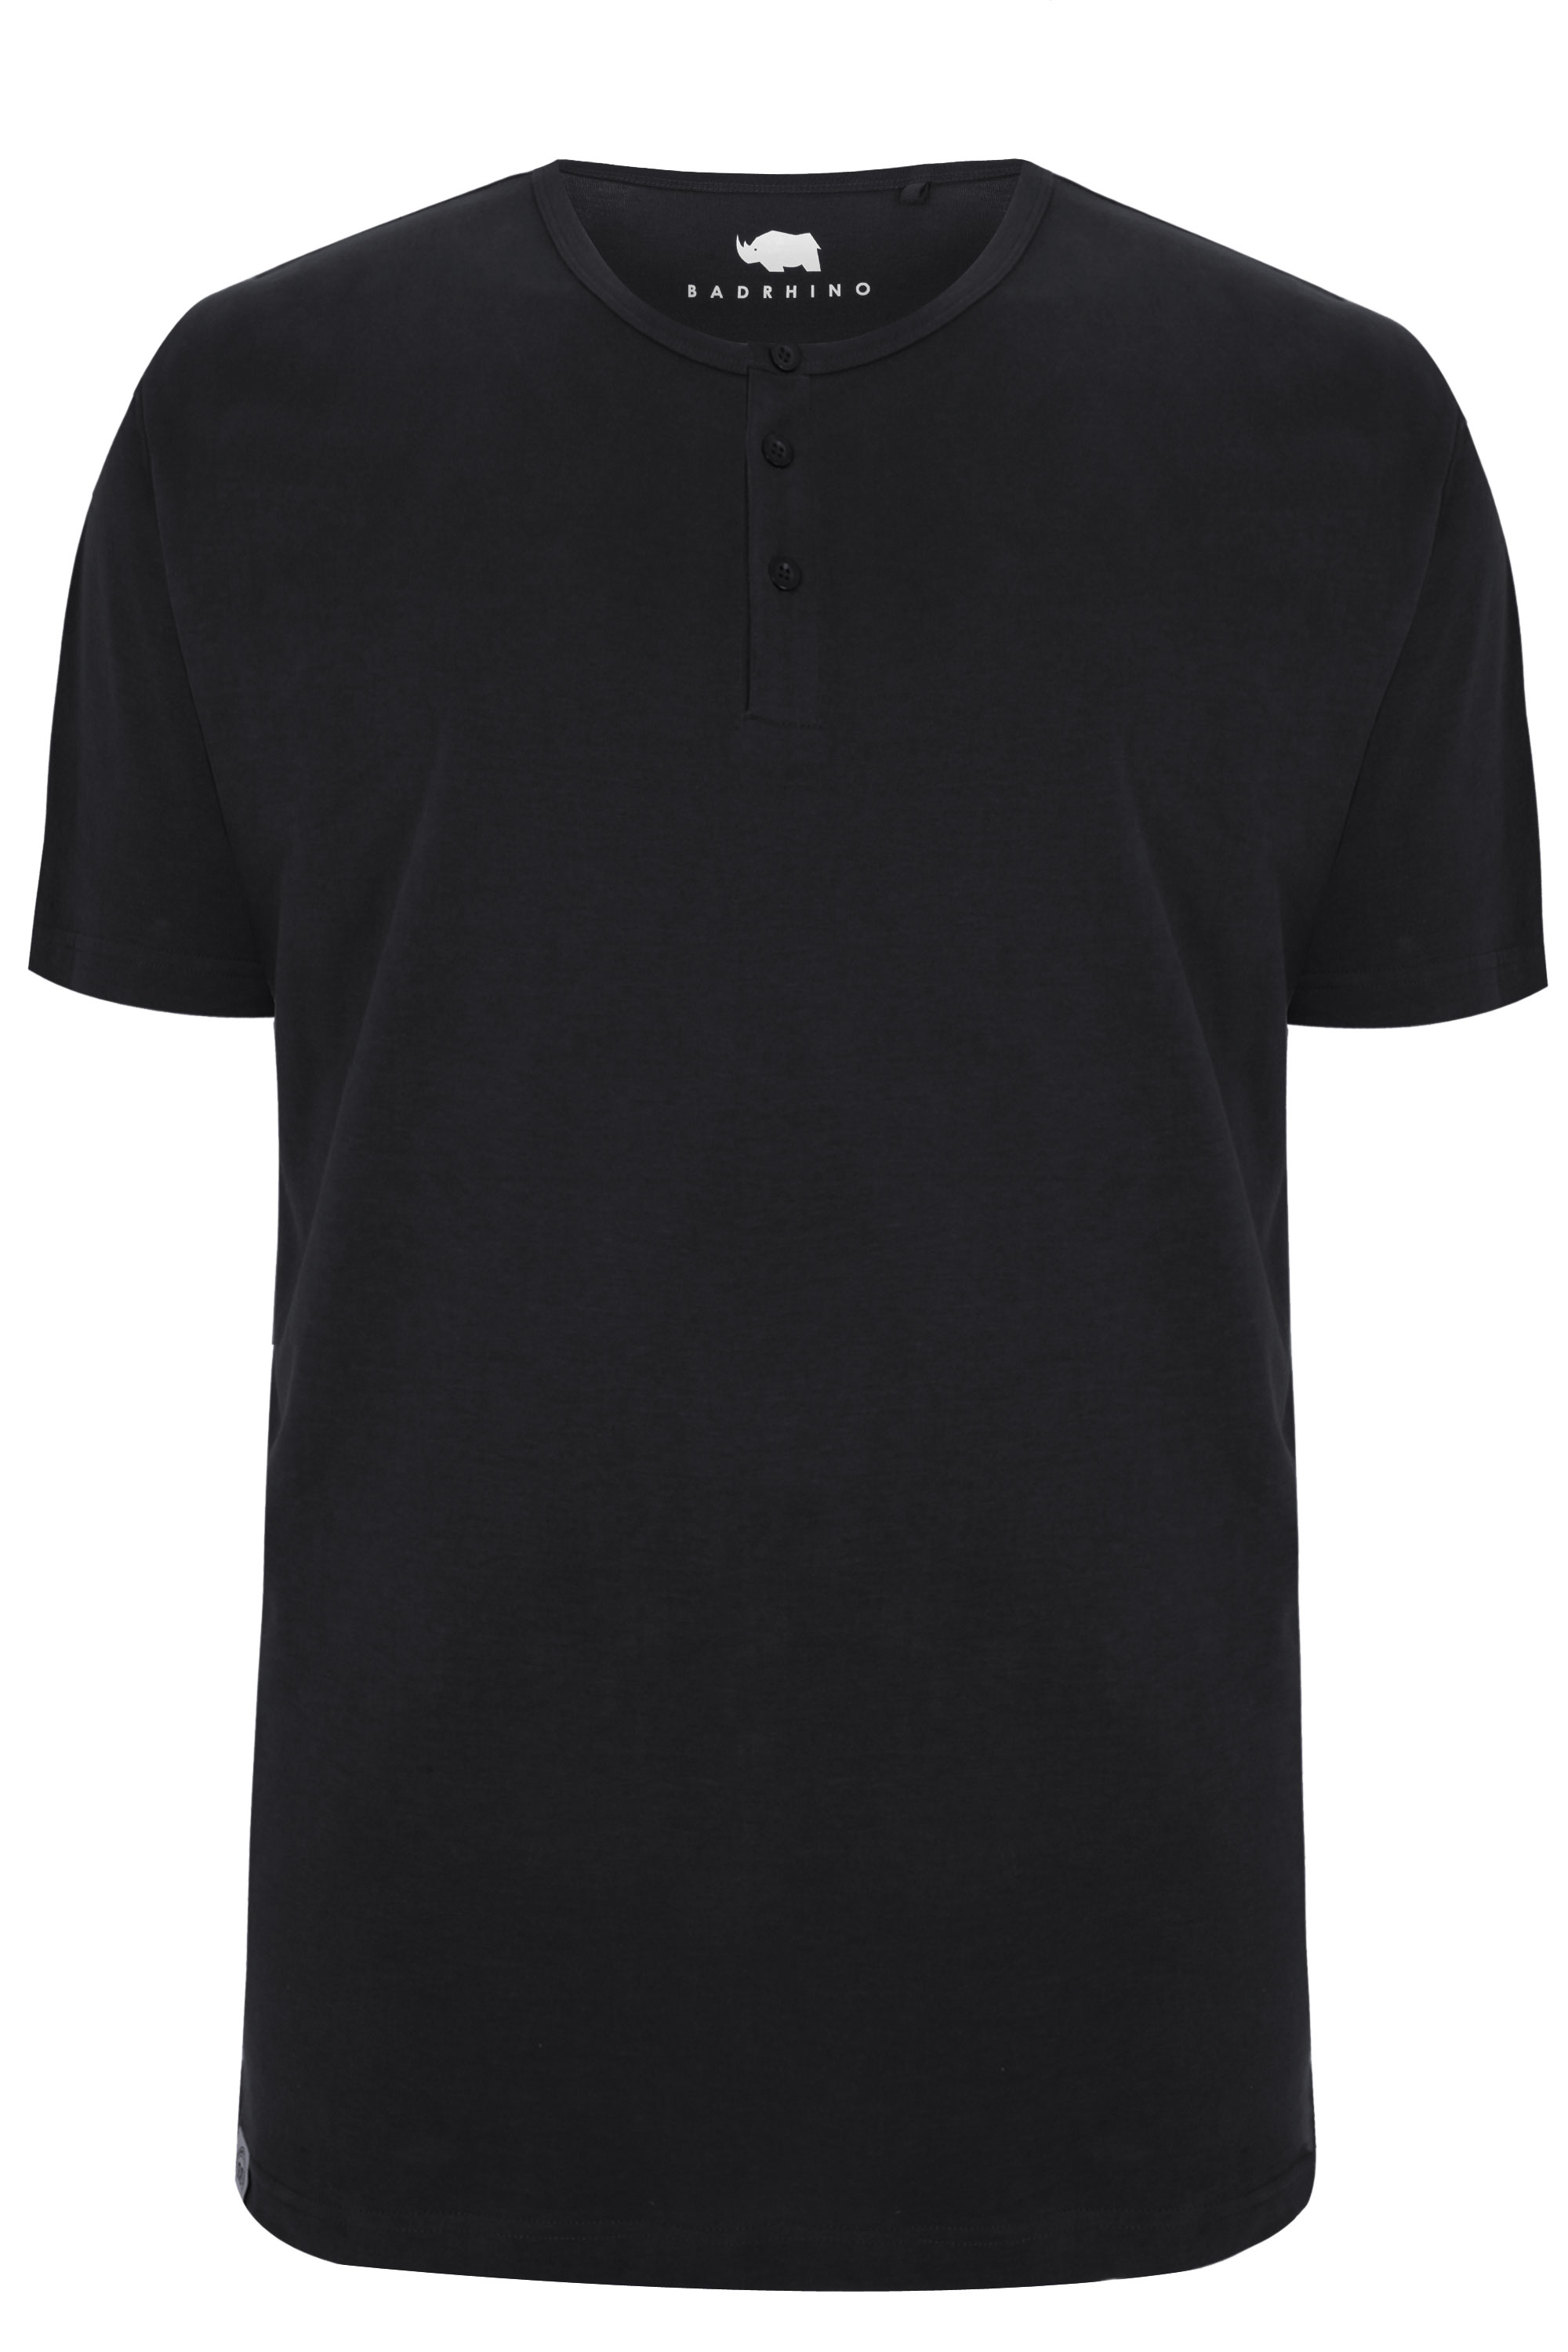 BadRhino Black Short Sleeve Grandad T-Shirt sizes L to 8XL